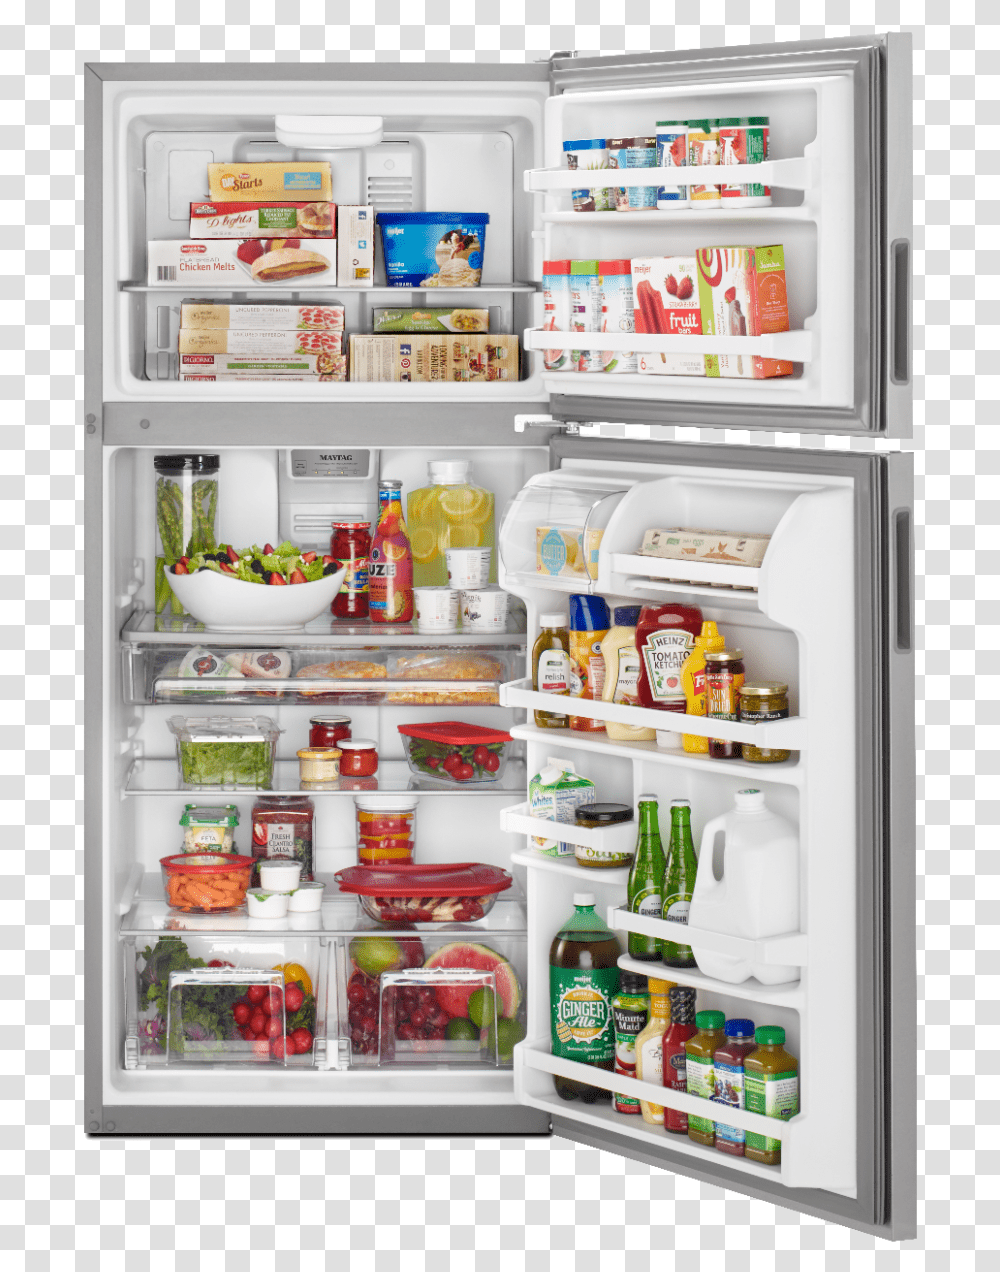 Top Freezer Refrigerator Stocked With Food Organizing A Top Freezer Refrigerator, Appliance, Shelf, Furniture, Jar Transparent Png